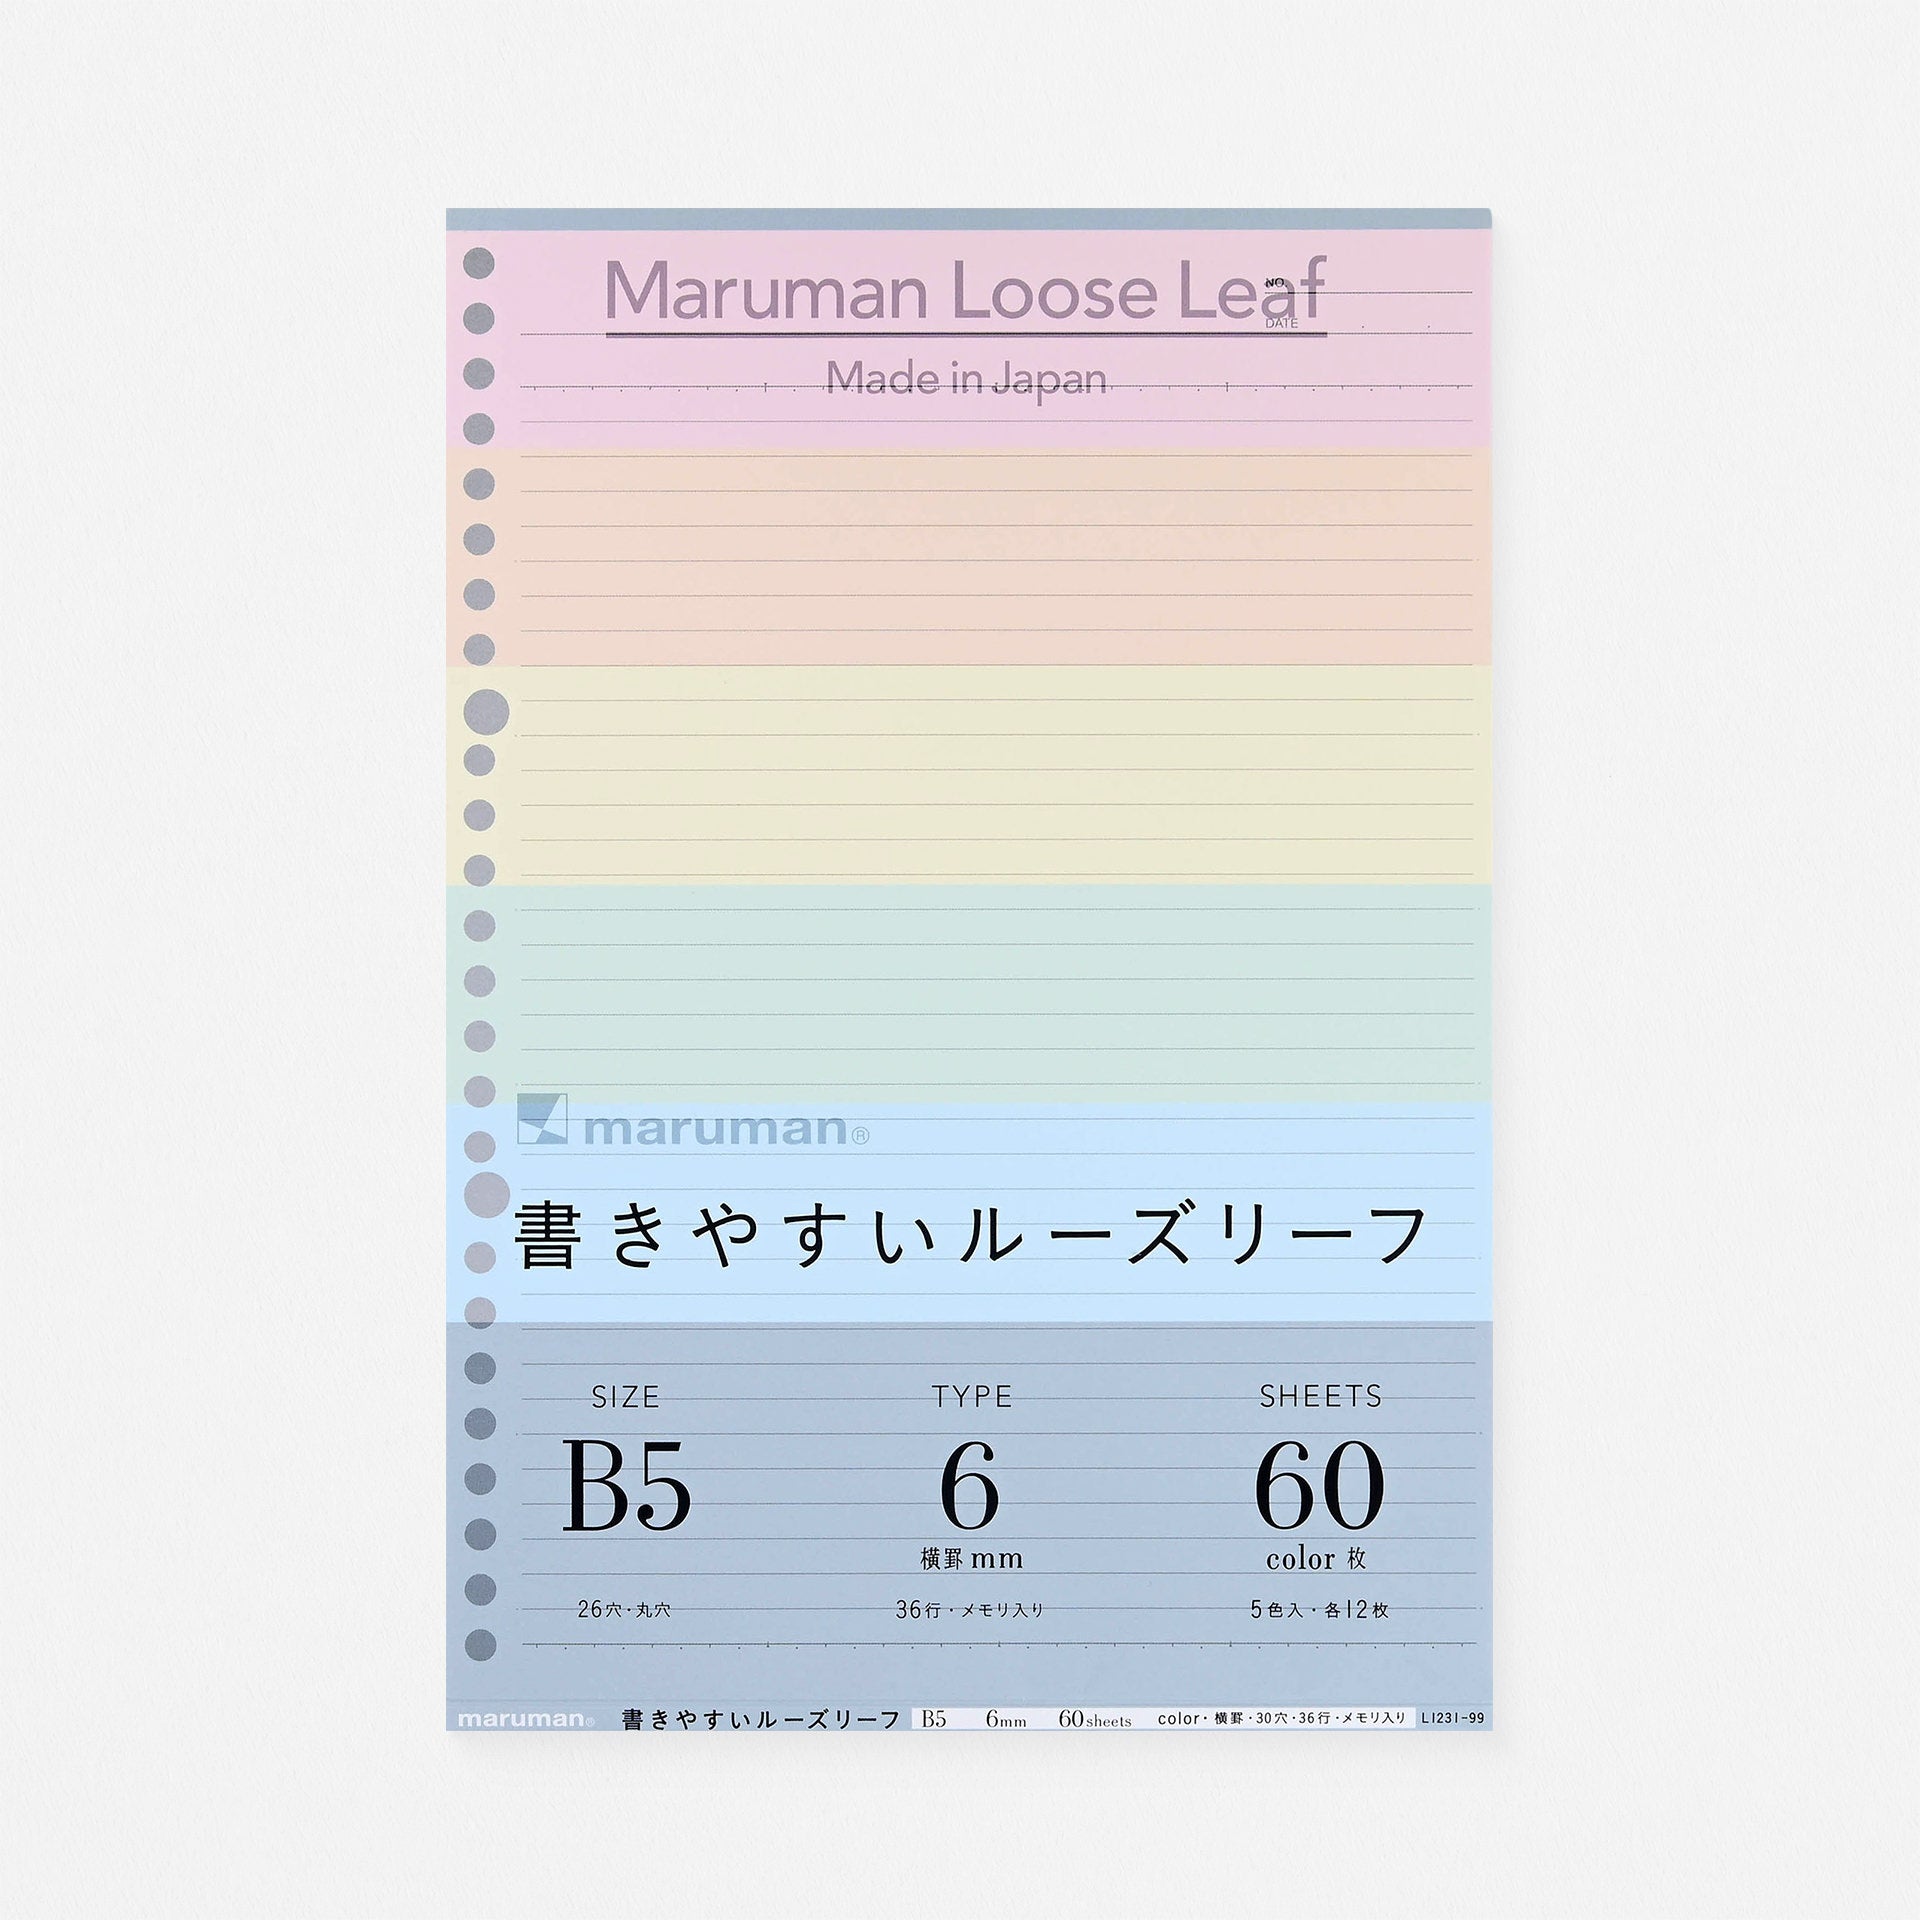 Maruman Loose Leaf Sheets B5 Multicolor 